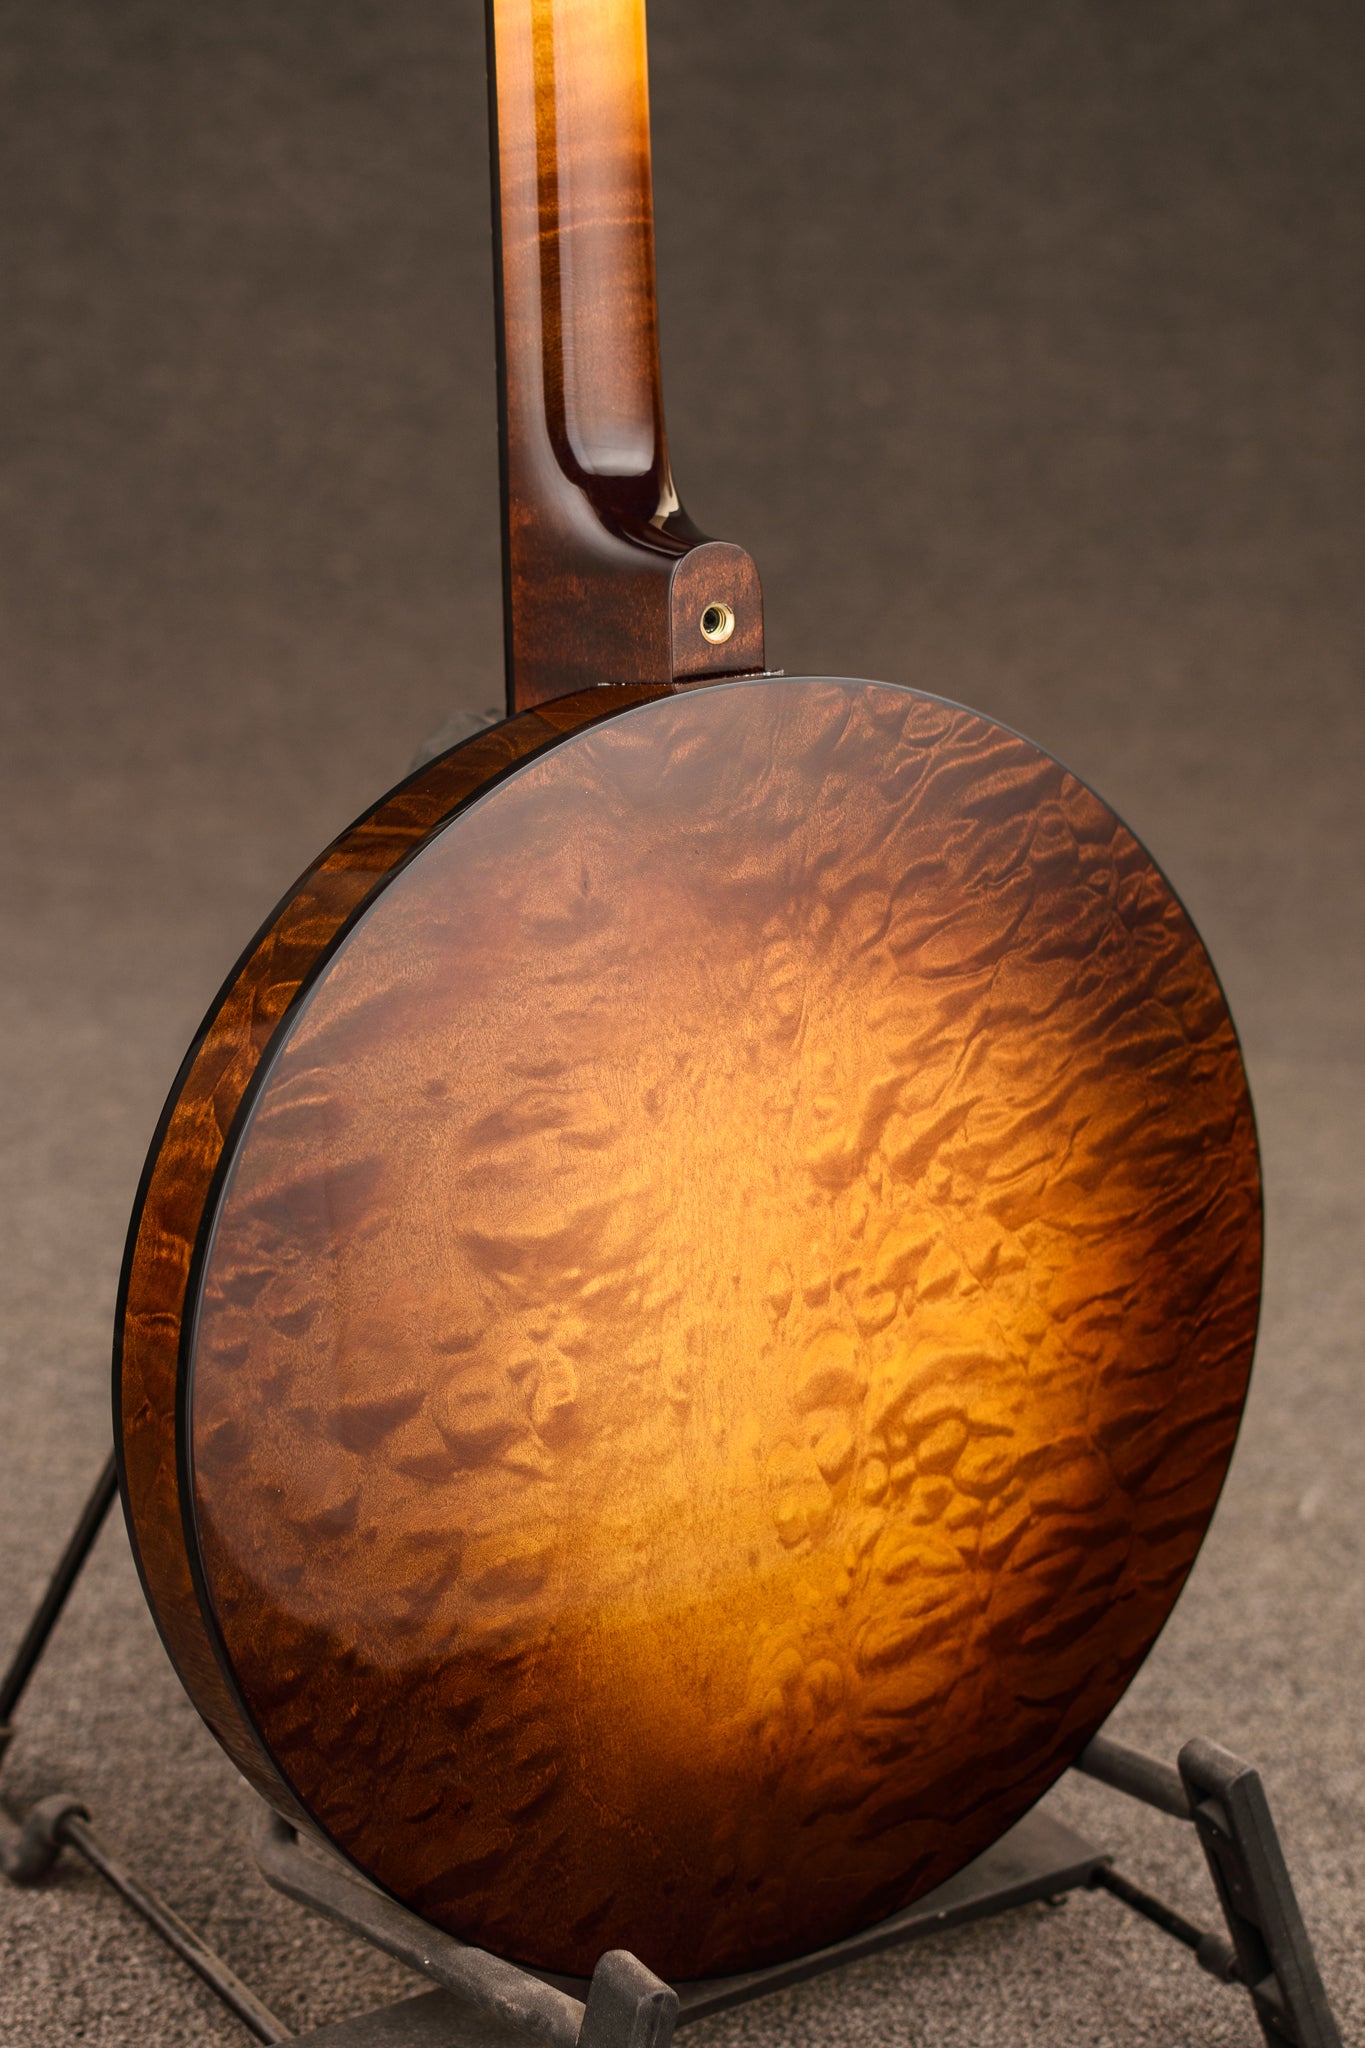 Nechville Curly Maple Phantom Banjo w/ Quilted Maple Resonator